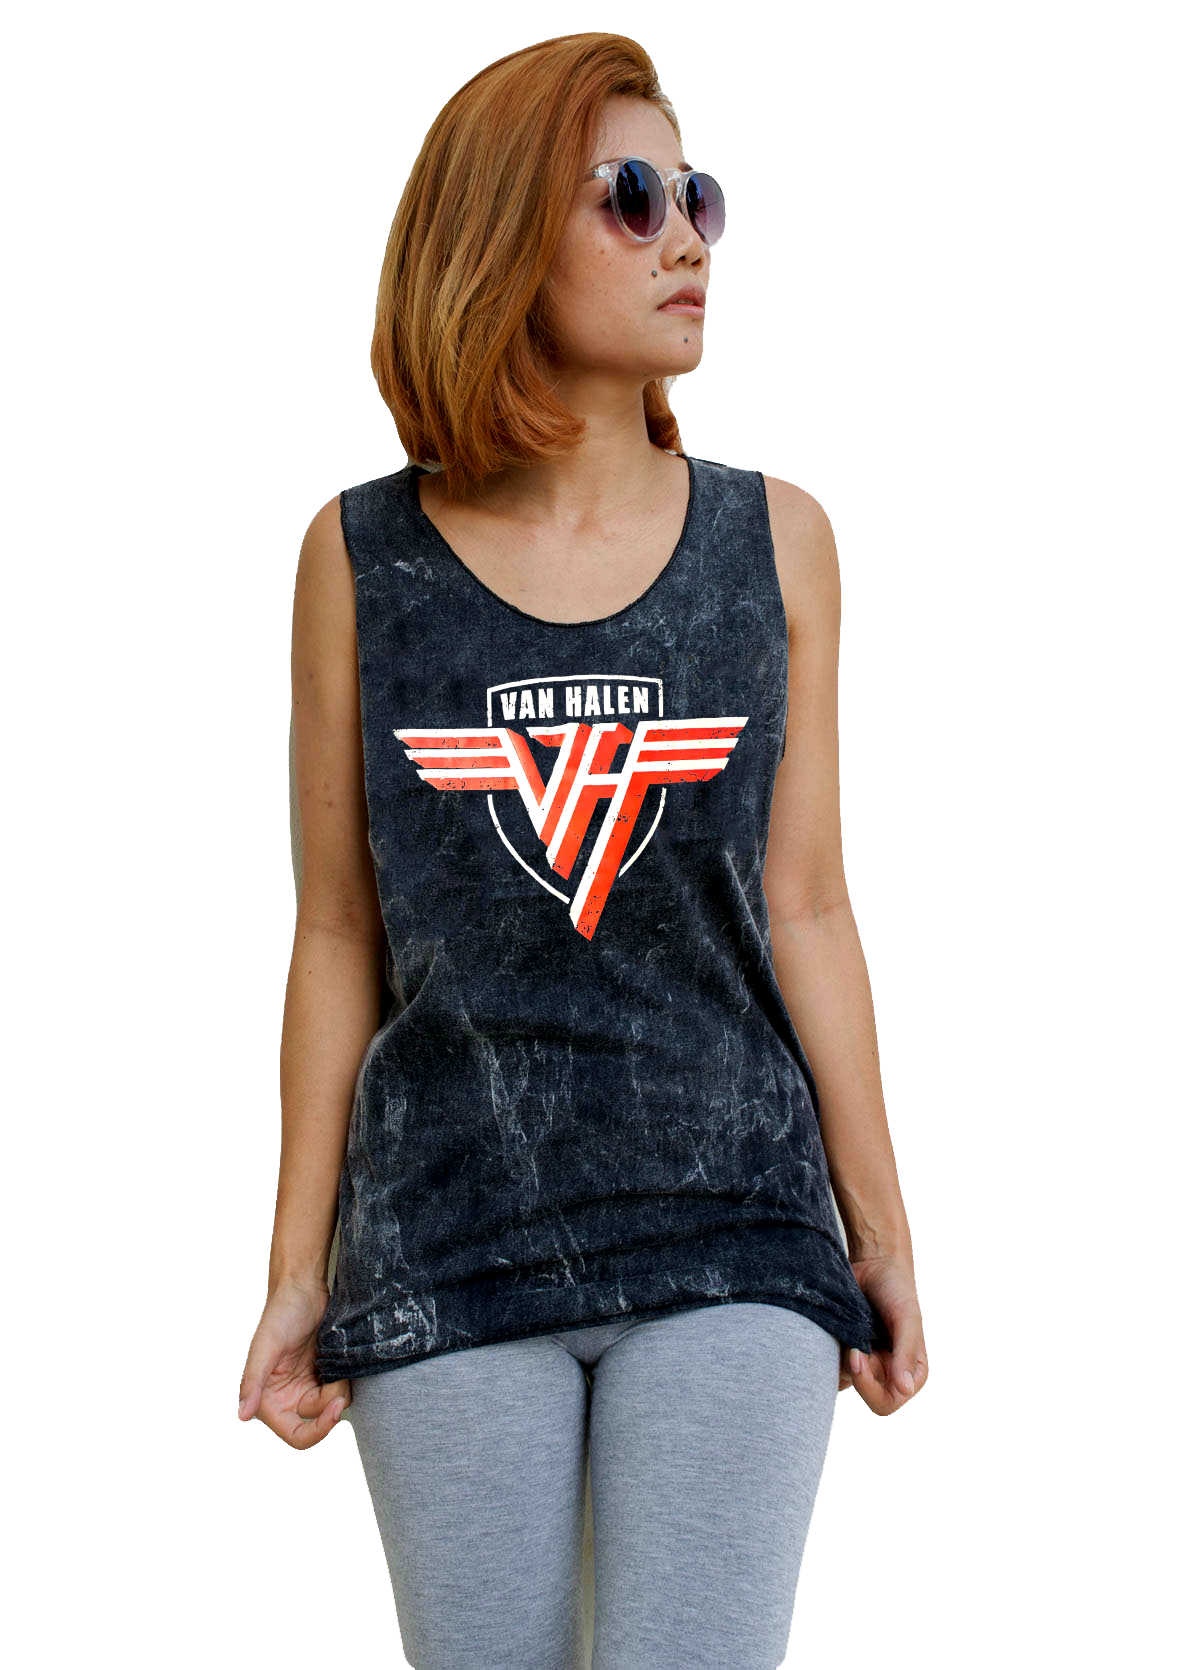 Unisex Van Halen Tank-Top Singlet vest Sleeveless T-shirt